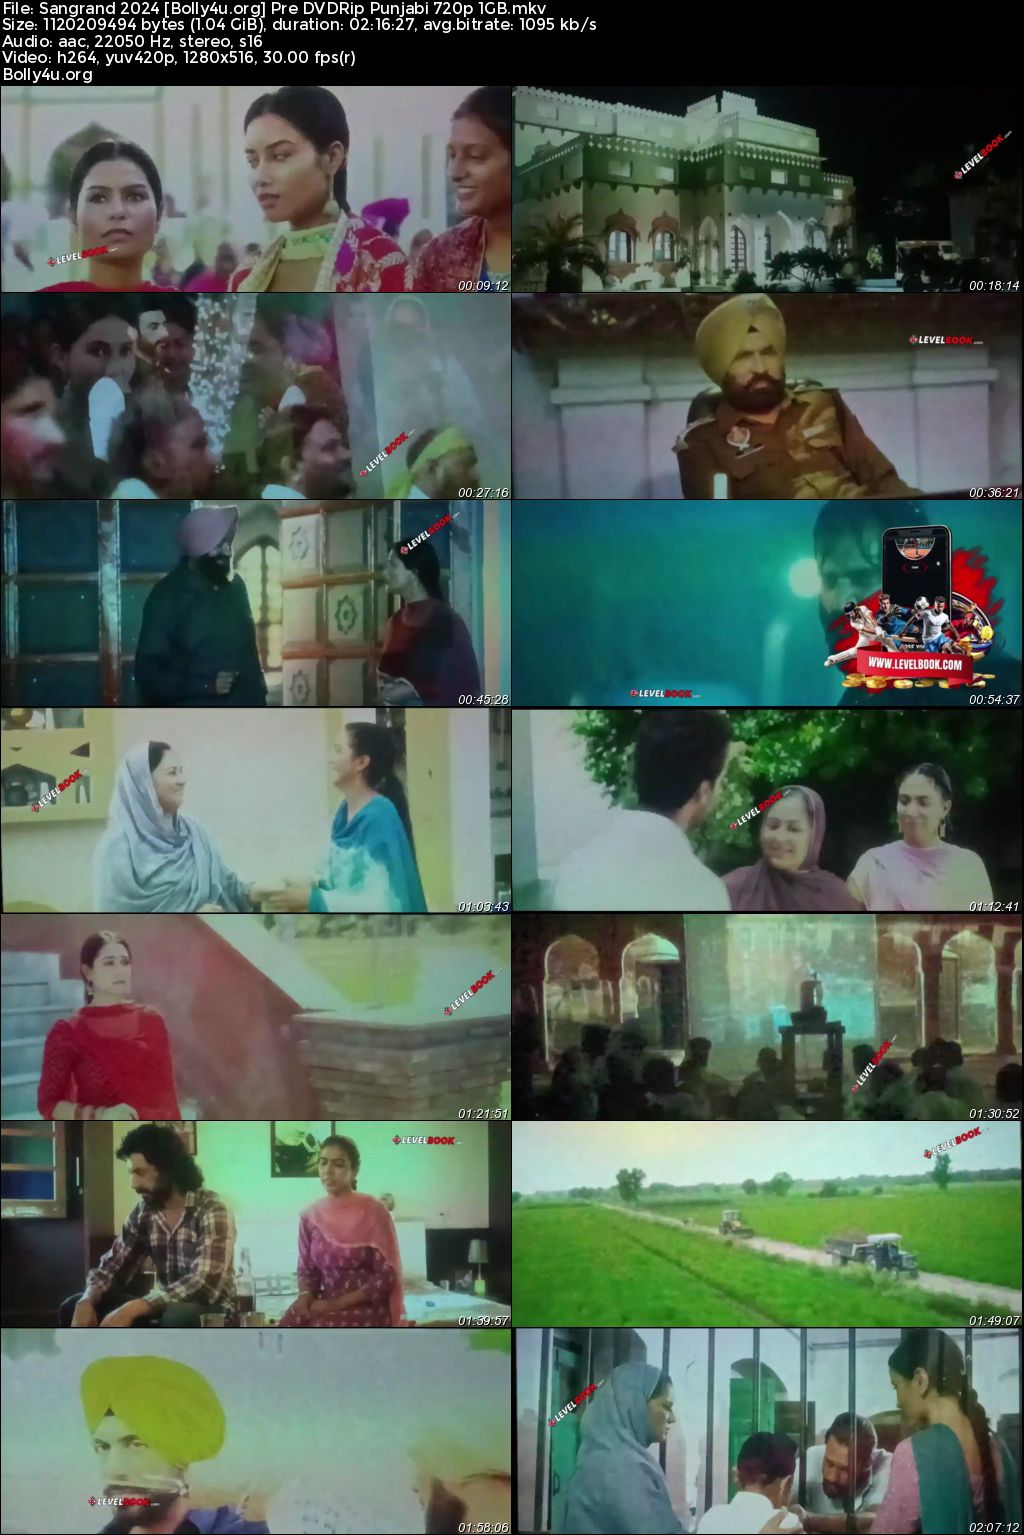 Sangrand 2024 Pre DVDRip Punjabi Full Movie Download 720p 480p